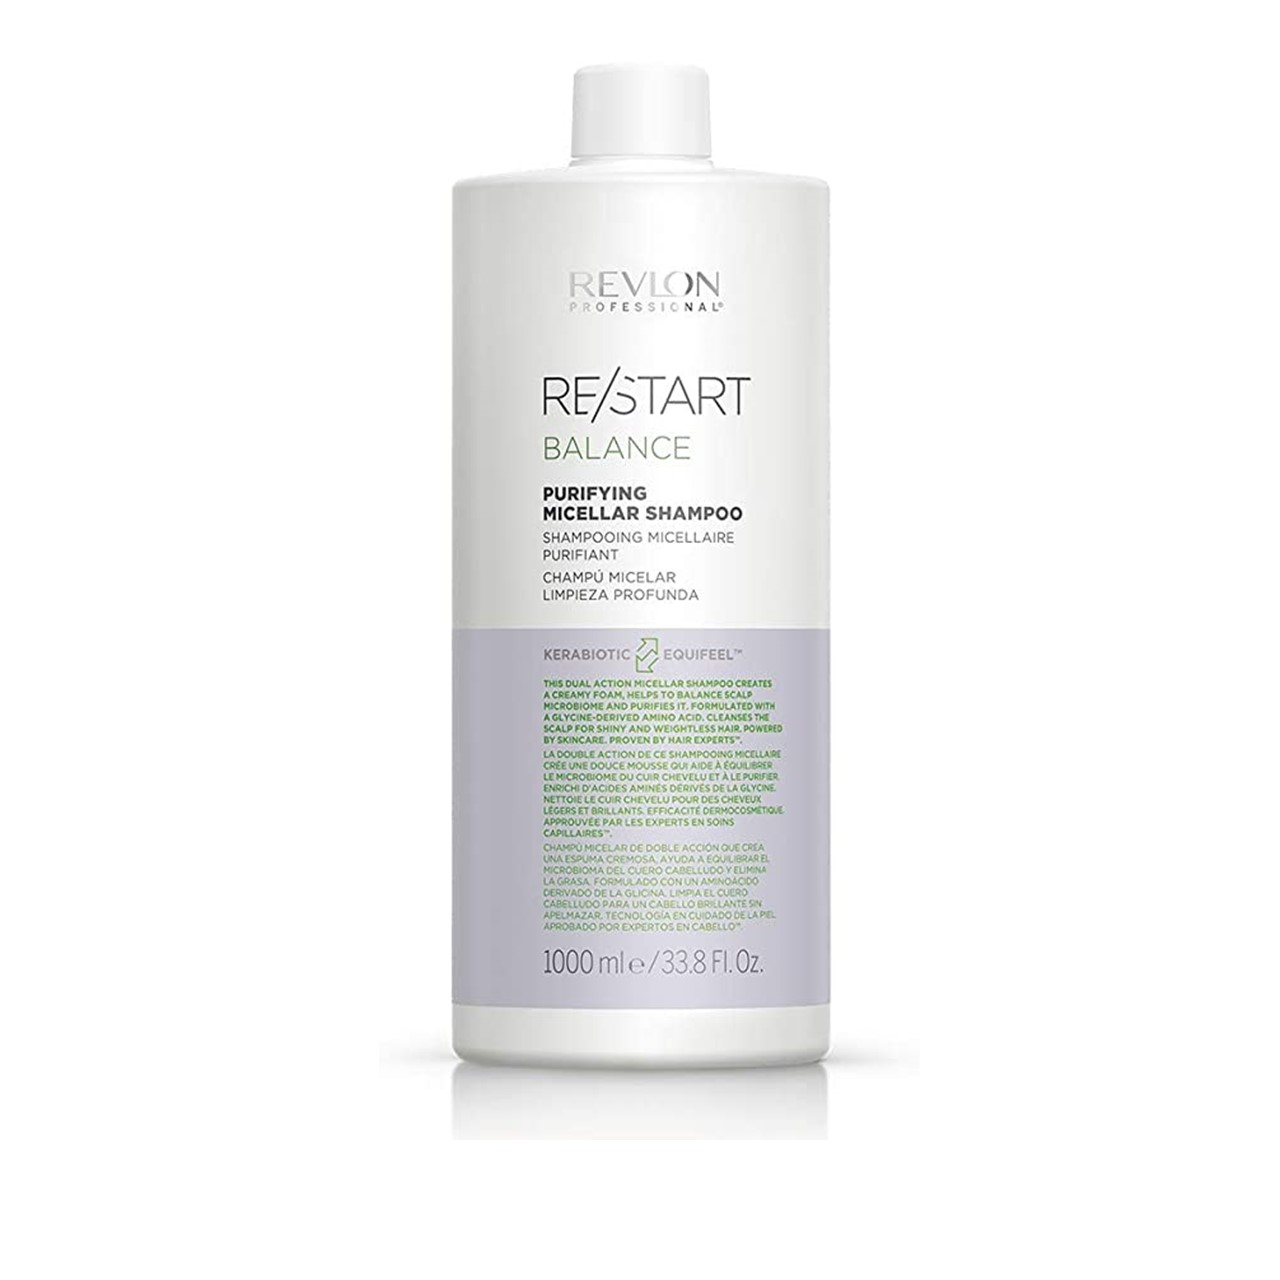 Revlon Professional Re/Start Balance Purifying Micellar Shampoo 1L (33.81fl oz)